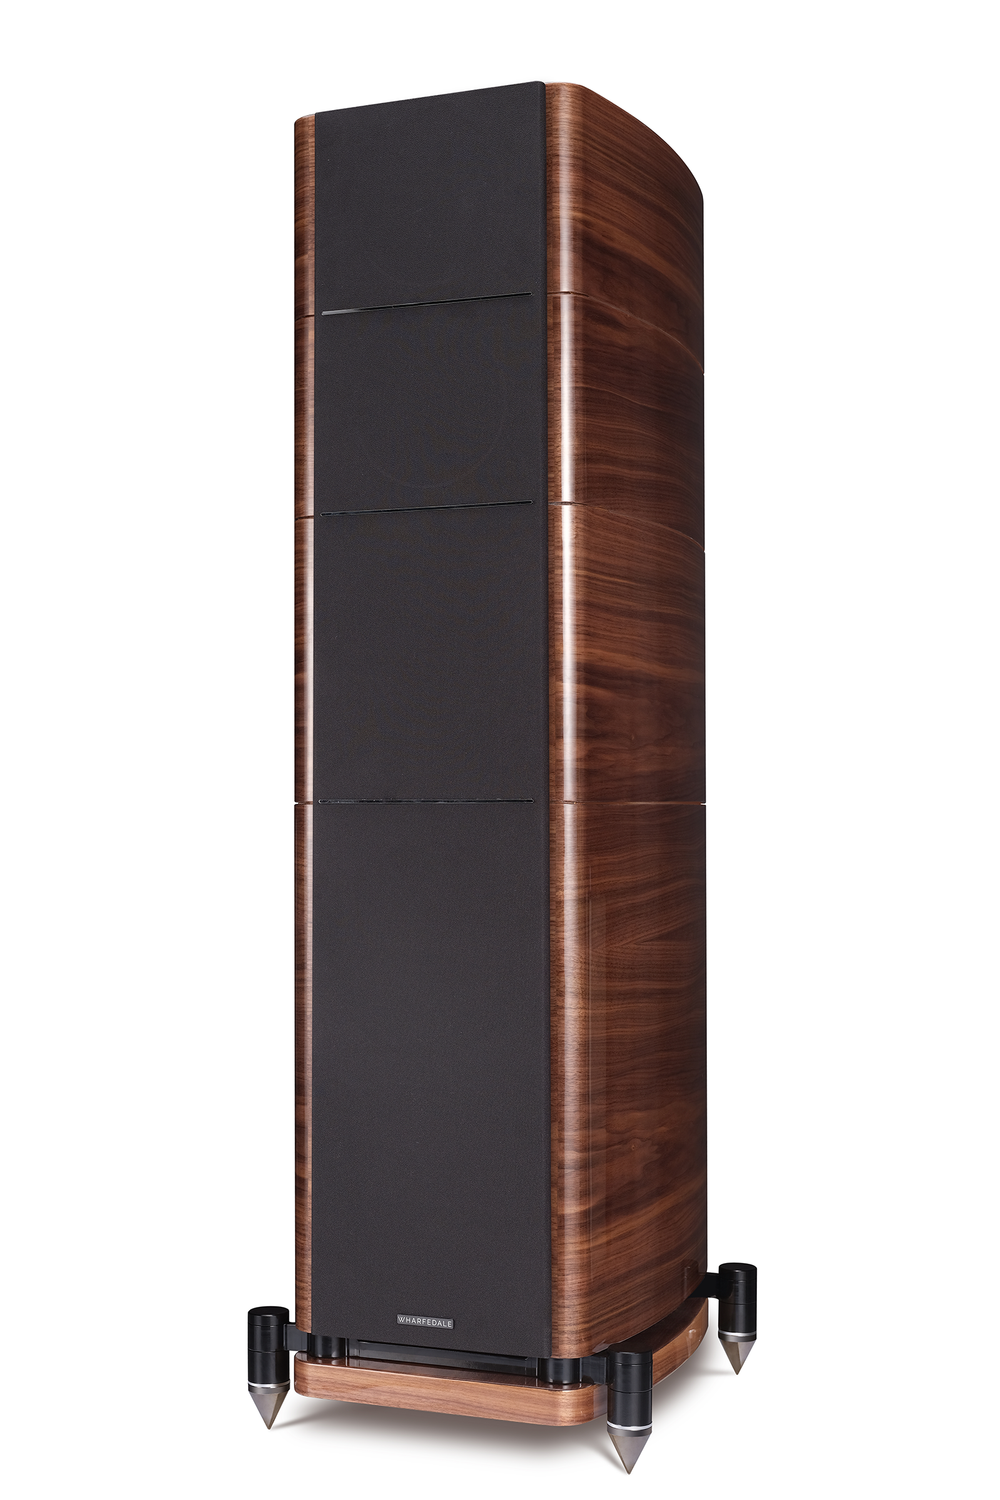 [B-stock] Elysian 4 Floorstanding Speakers (Pair)